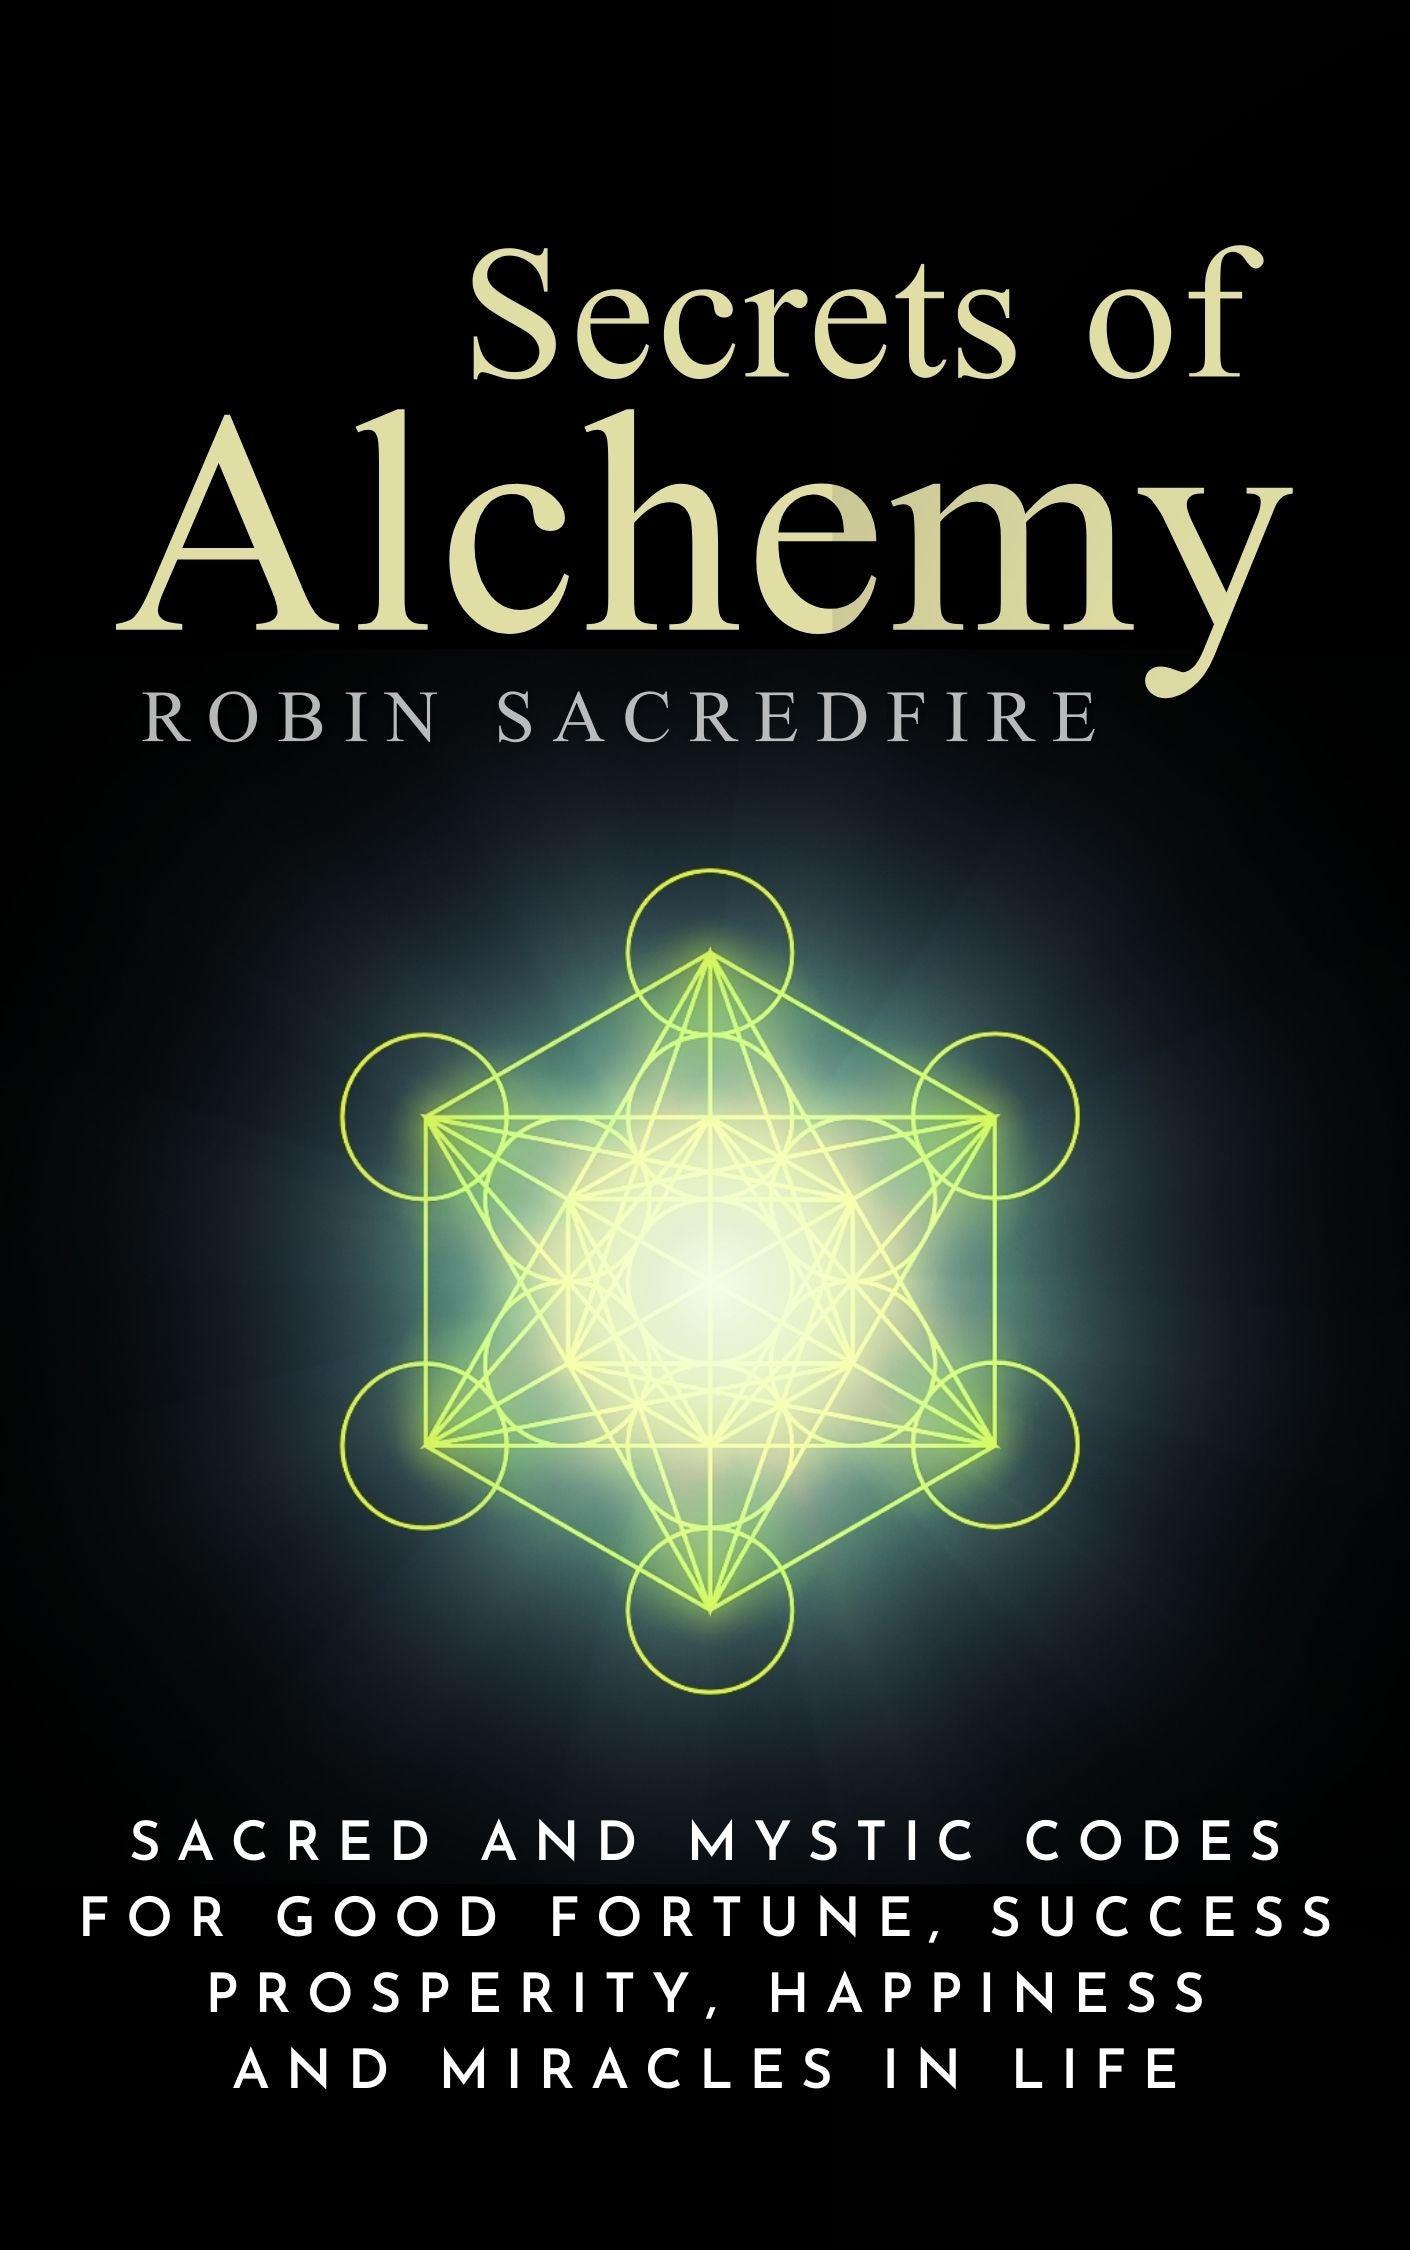 Secrets of Alchemy - 22 Lions